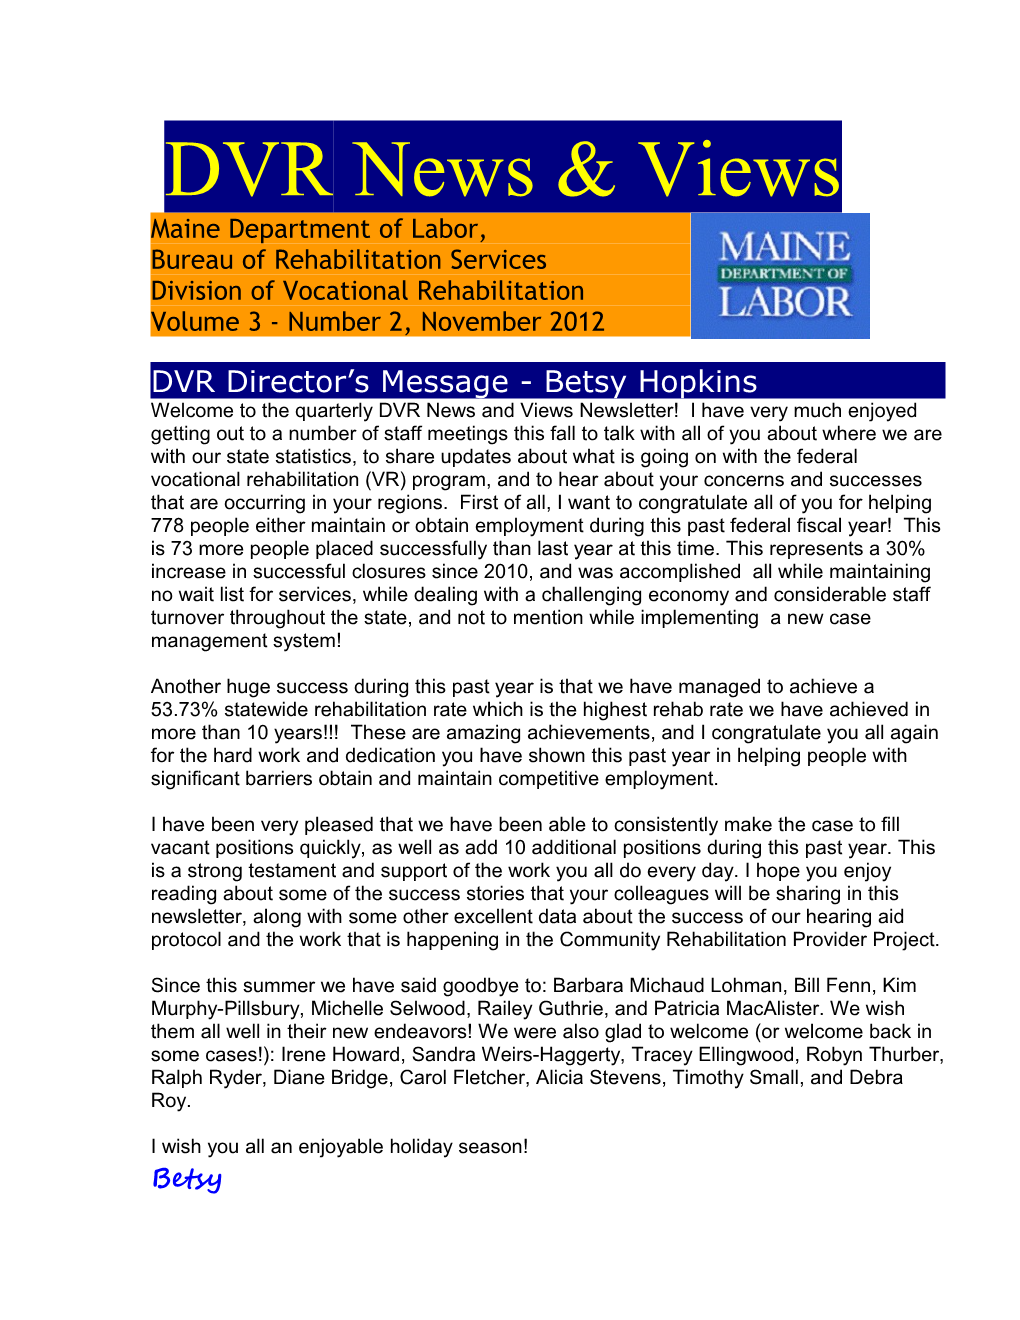 DVR Director S Message - Betsy Hopkins